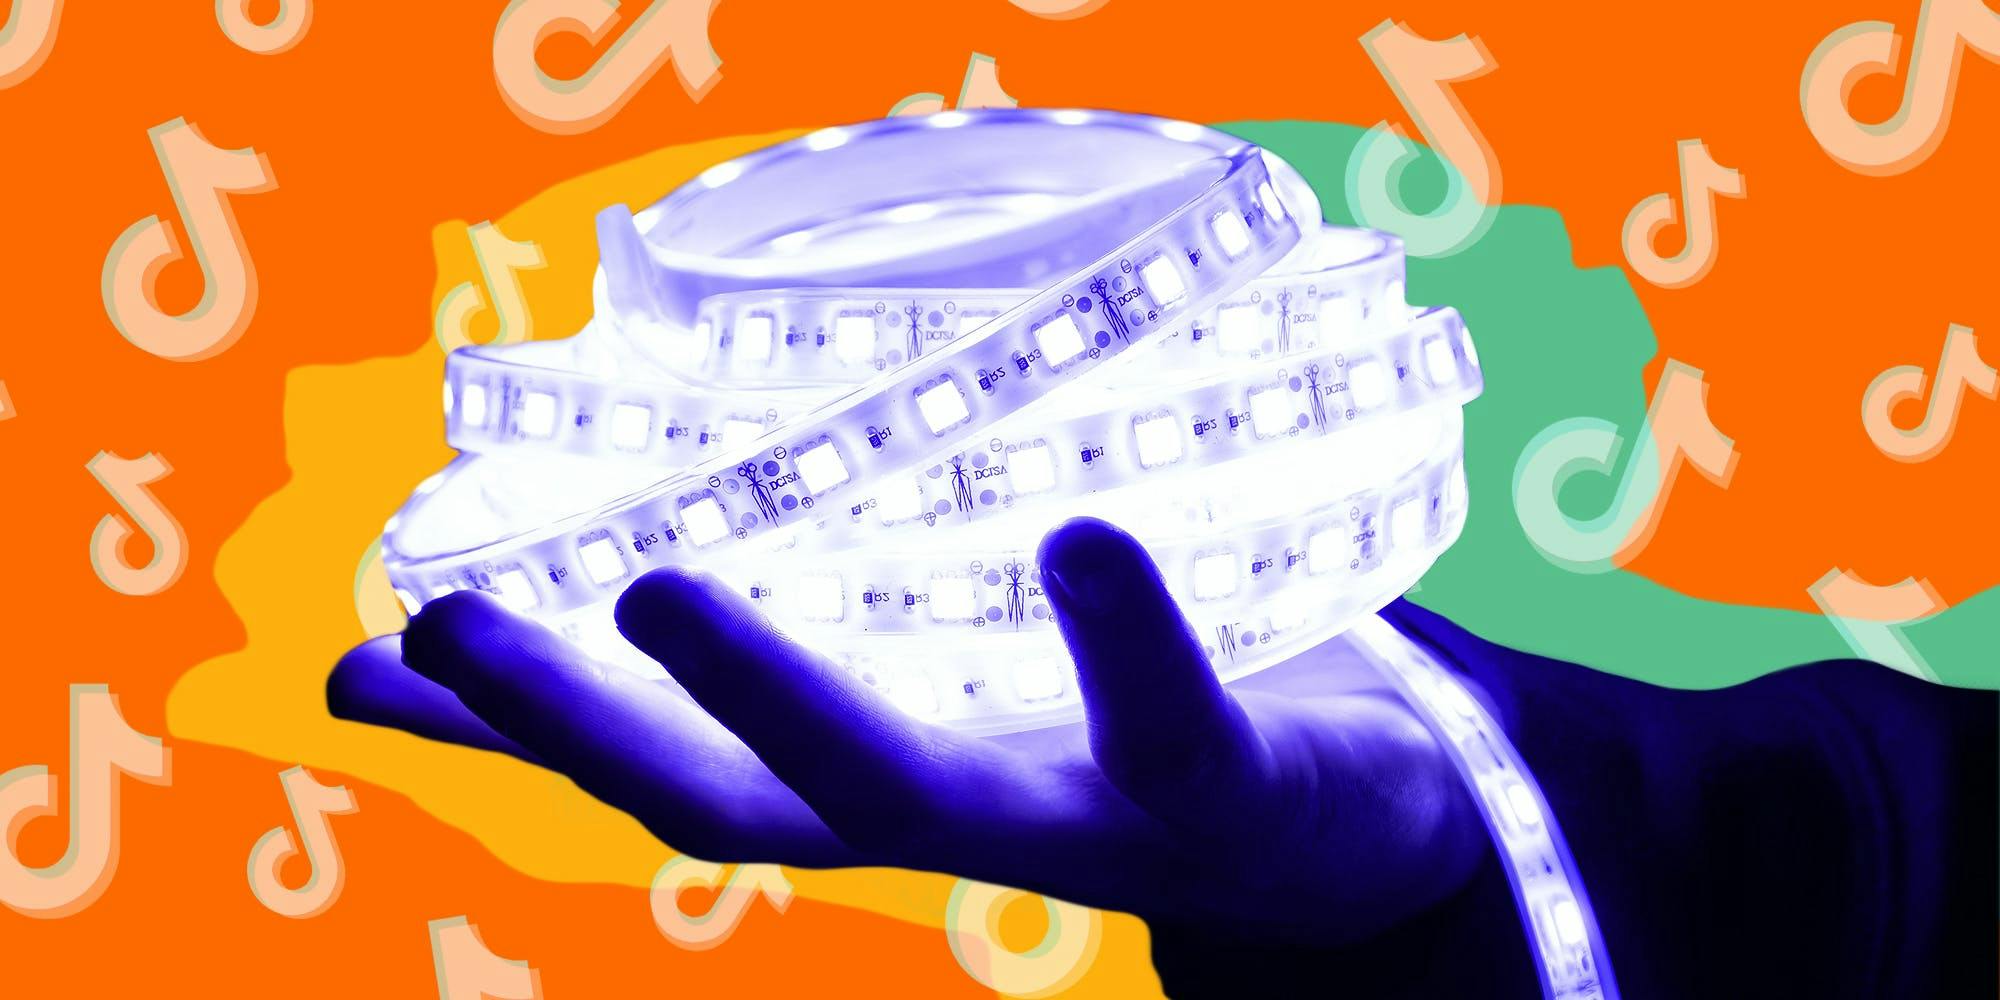 tiktok led lights  - featured image, a hand full of led lights and tiktok logos